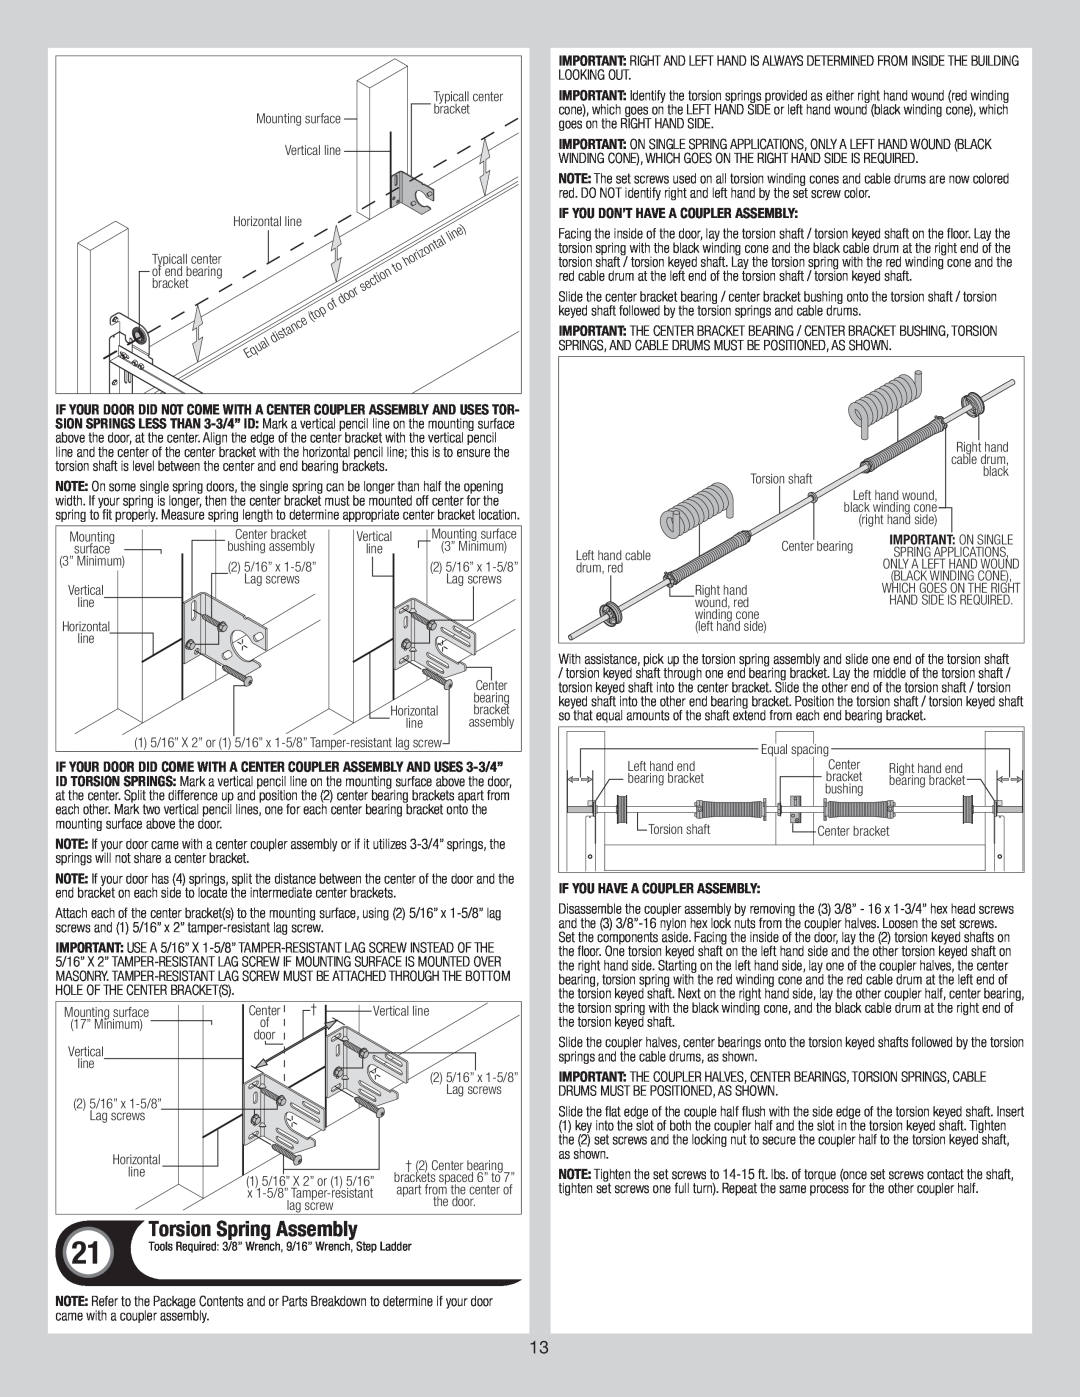 Wayne-Dalton 6600 installation instructions Torsion Spring Assembly 